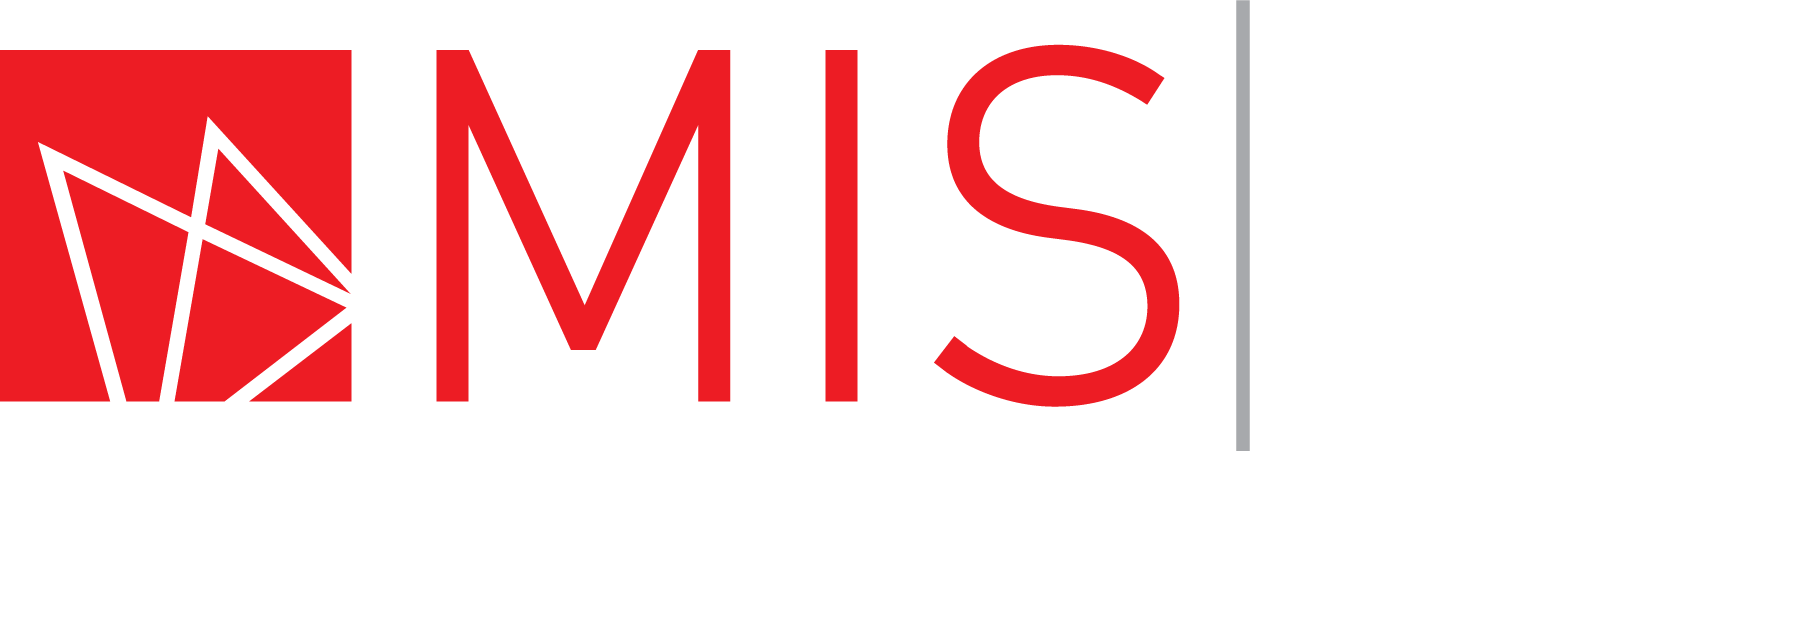 It Audit & Controls Conference - Mis Training Institute Logo (1807x641)